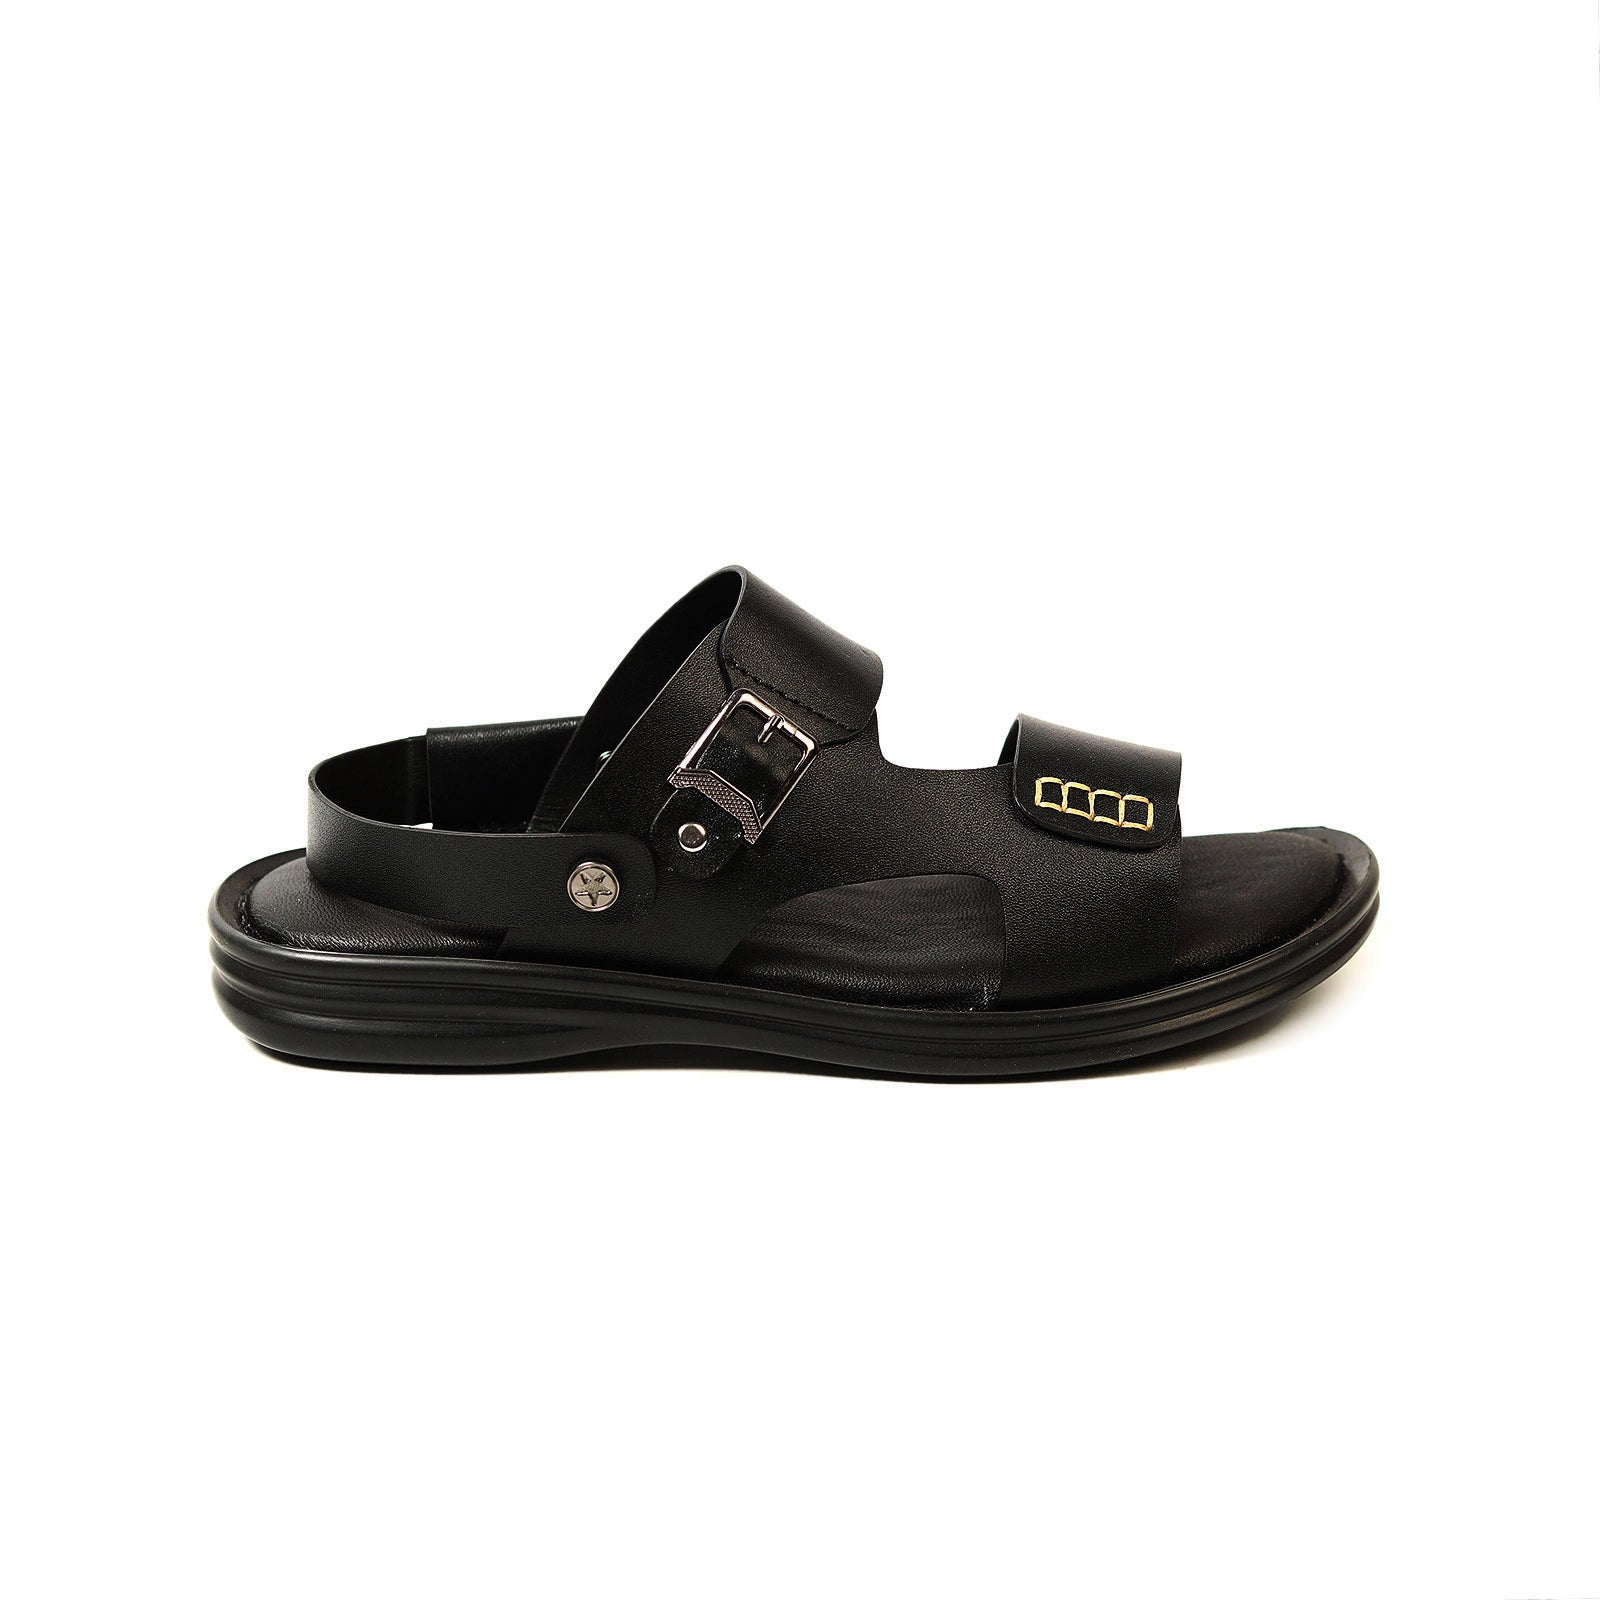 Zays Leather Sandal For Men (Black) - ZA09